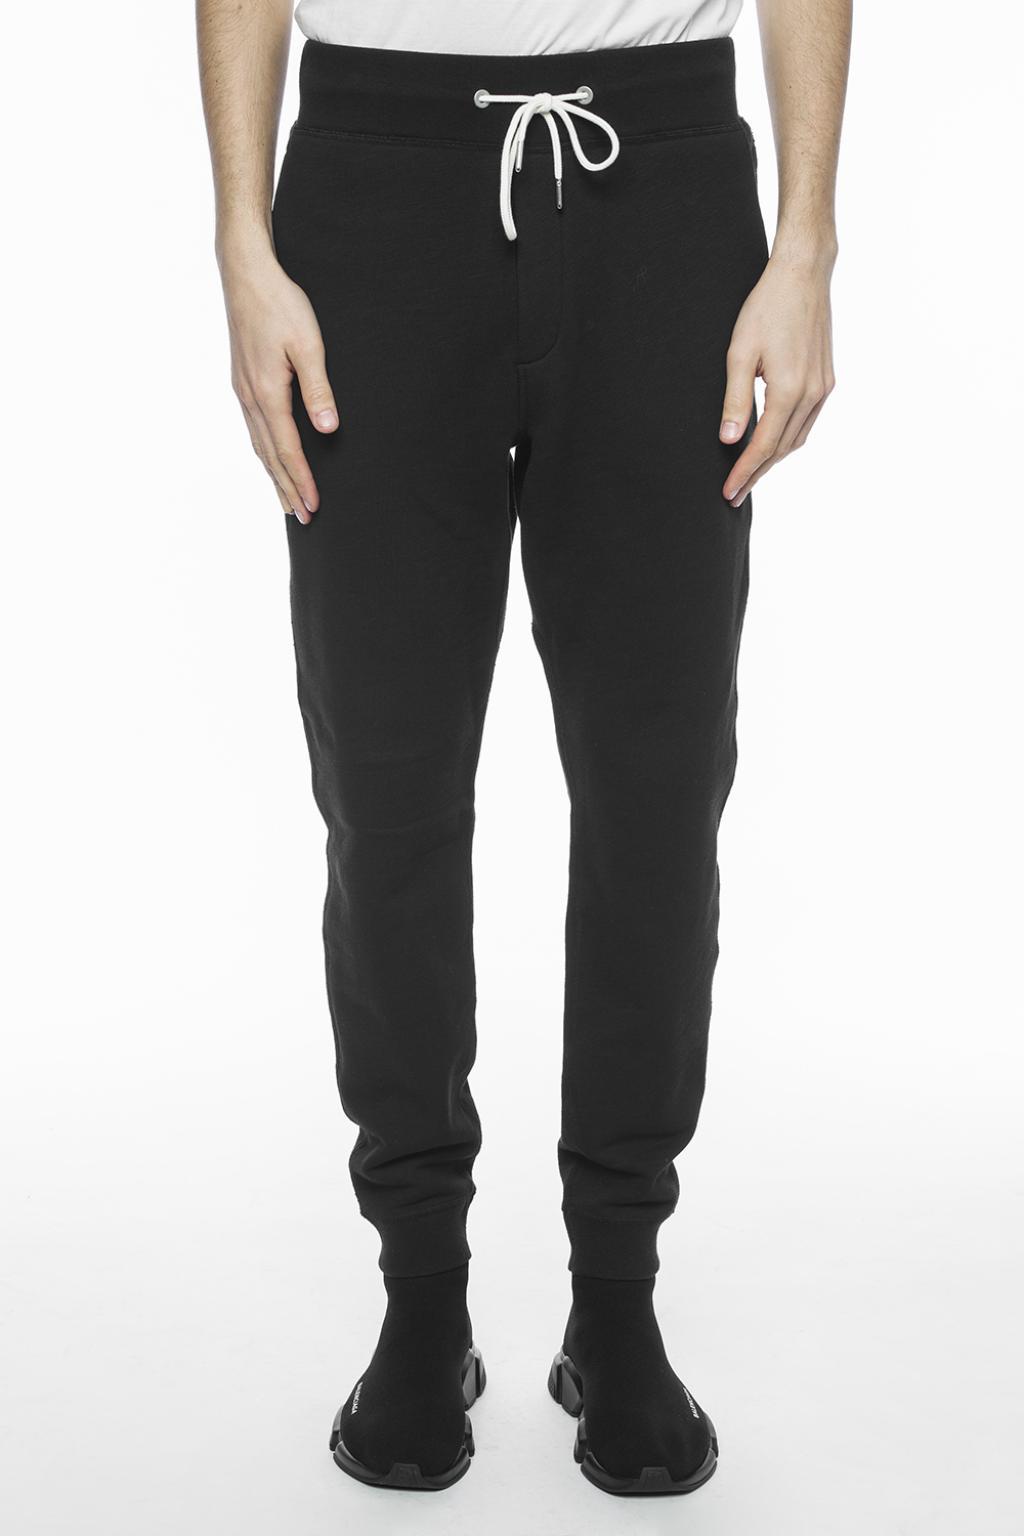 Rag & Bone Cotton Sweatpants in Black for Men - Save 10% - Lyst